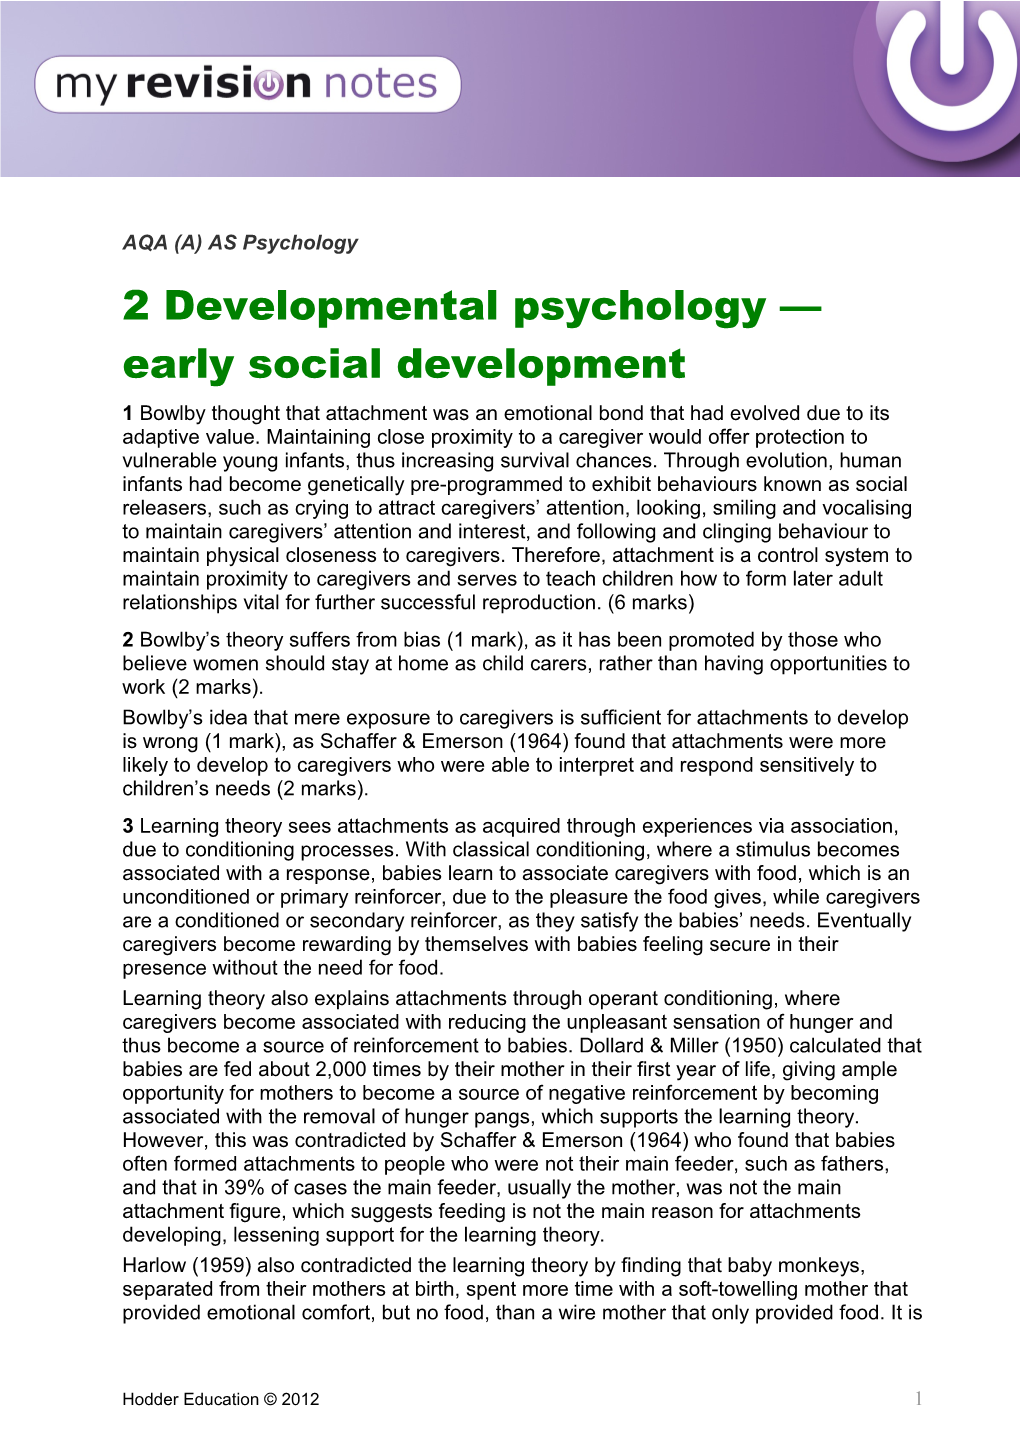 2 Developmental Psychology Early Social Development